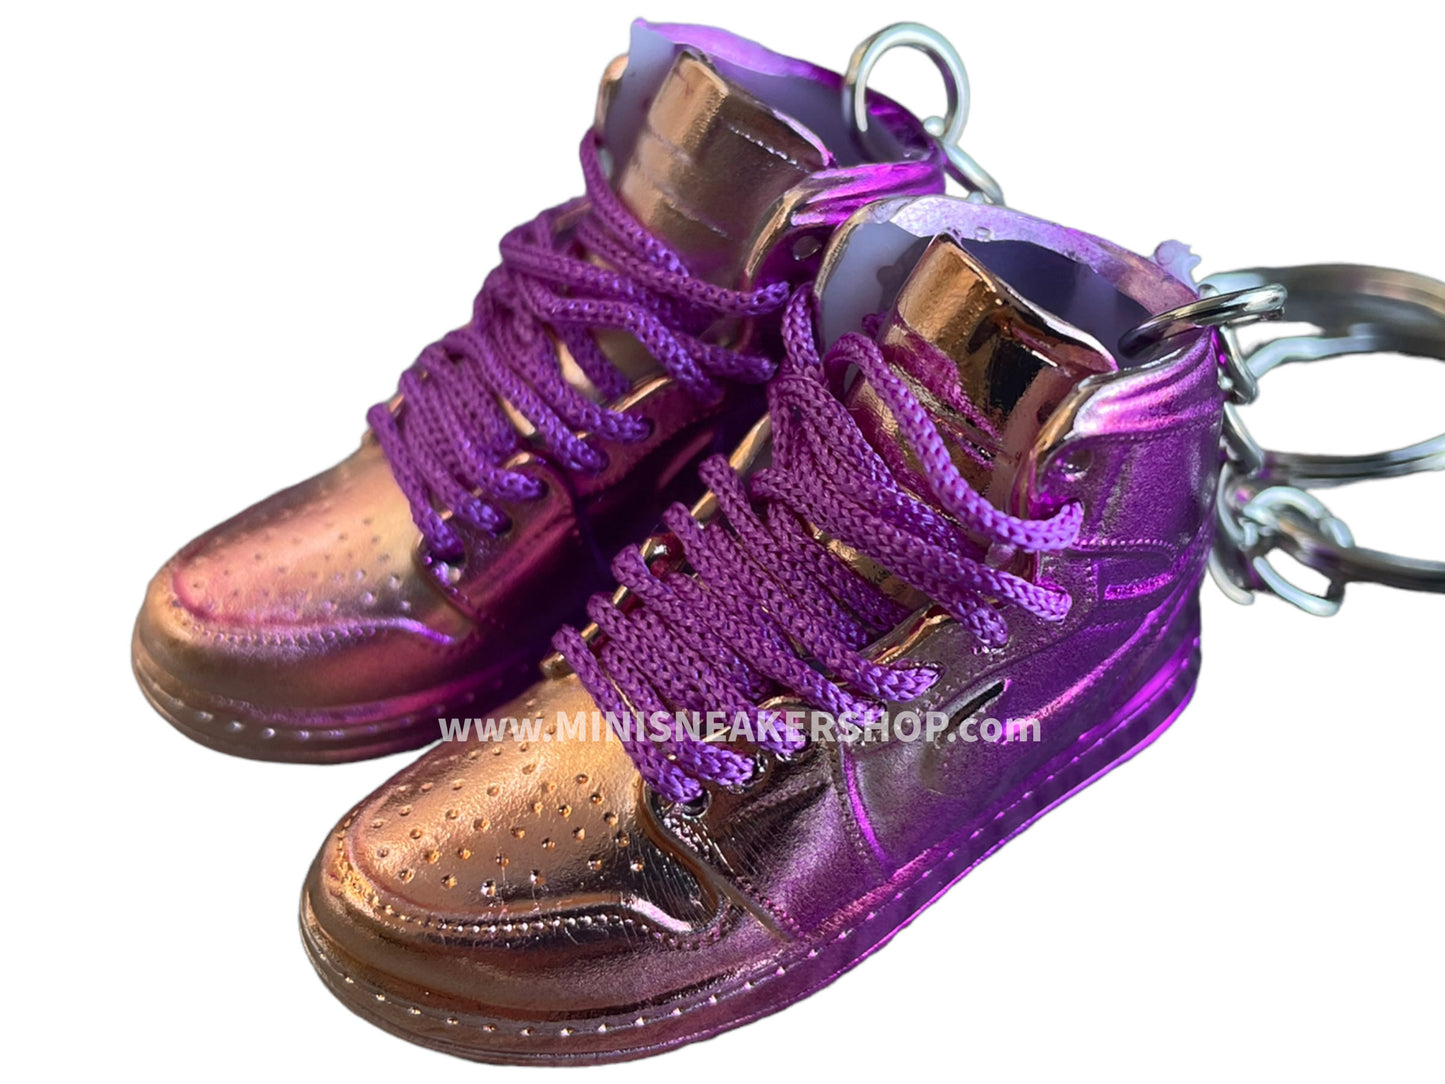 Mini sneaker keychain 3D  Air Jordan 1 - metallic pink